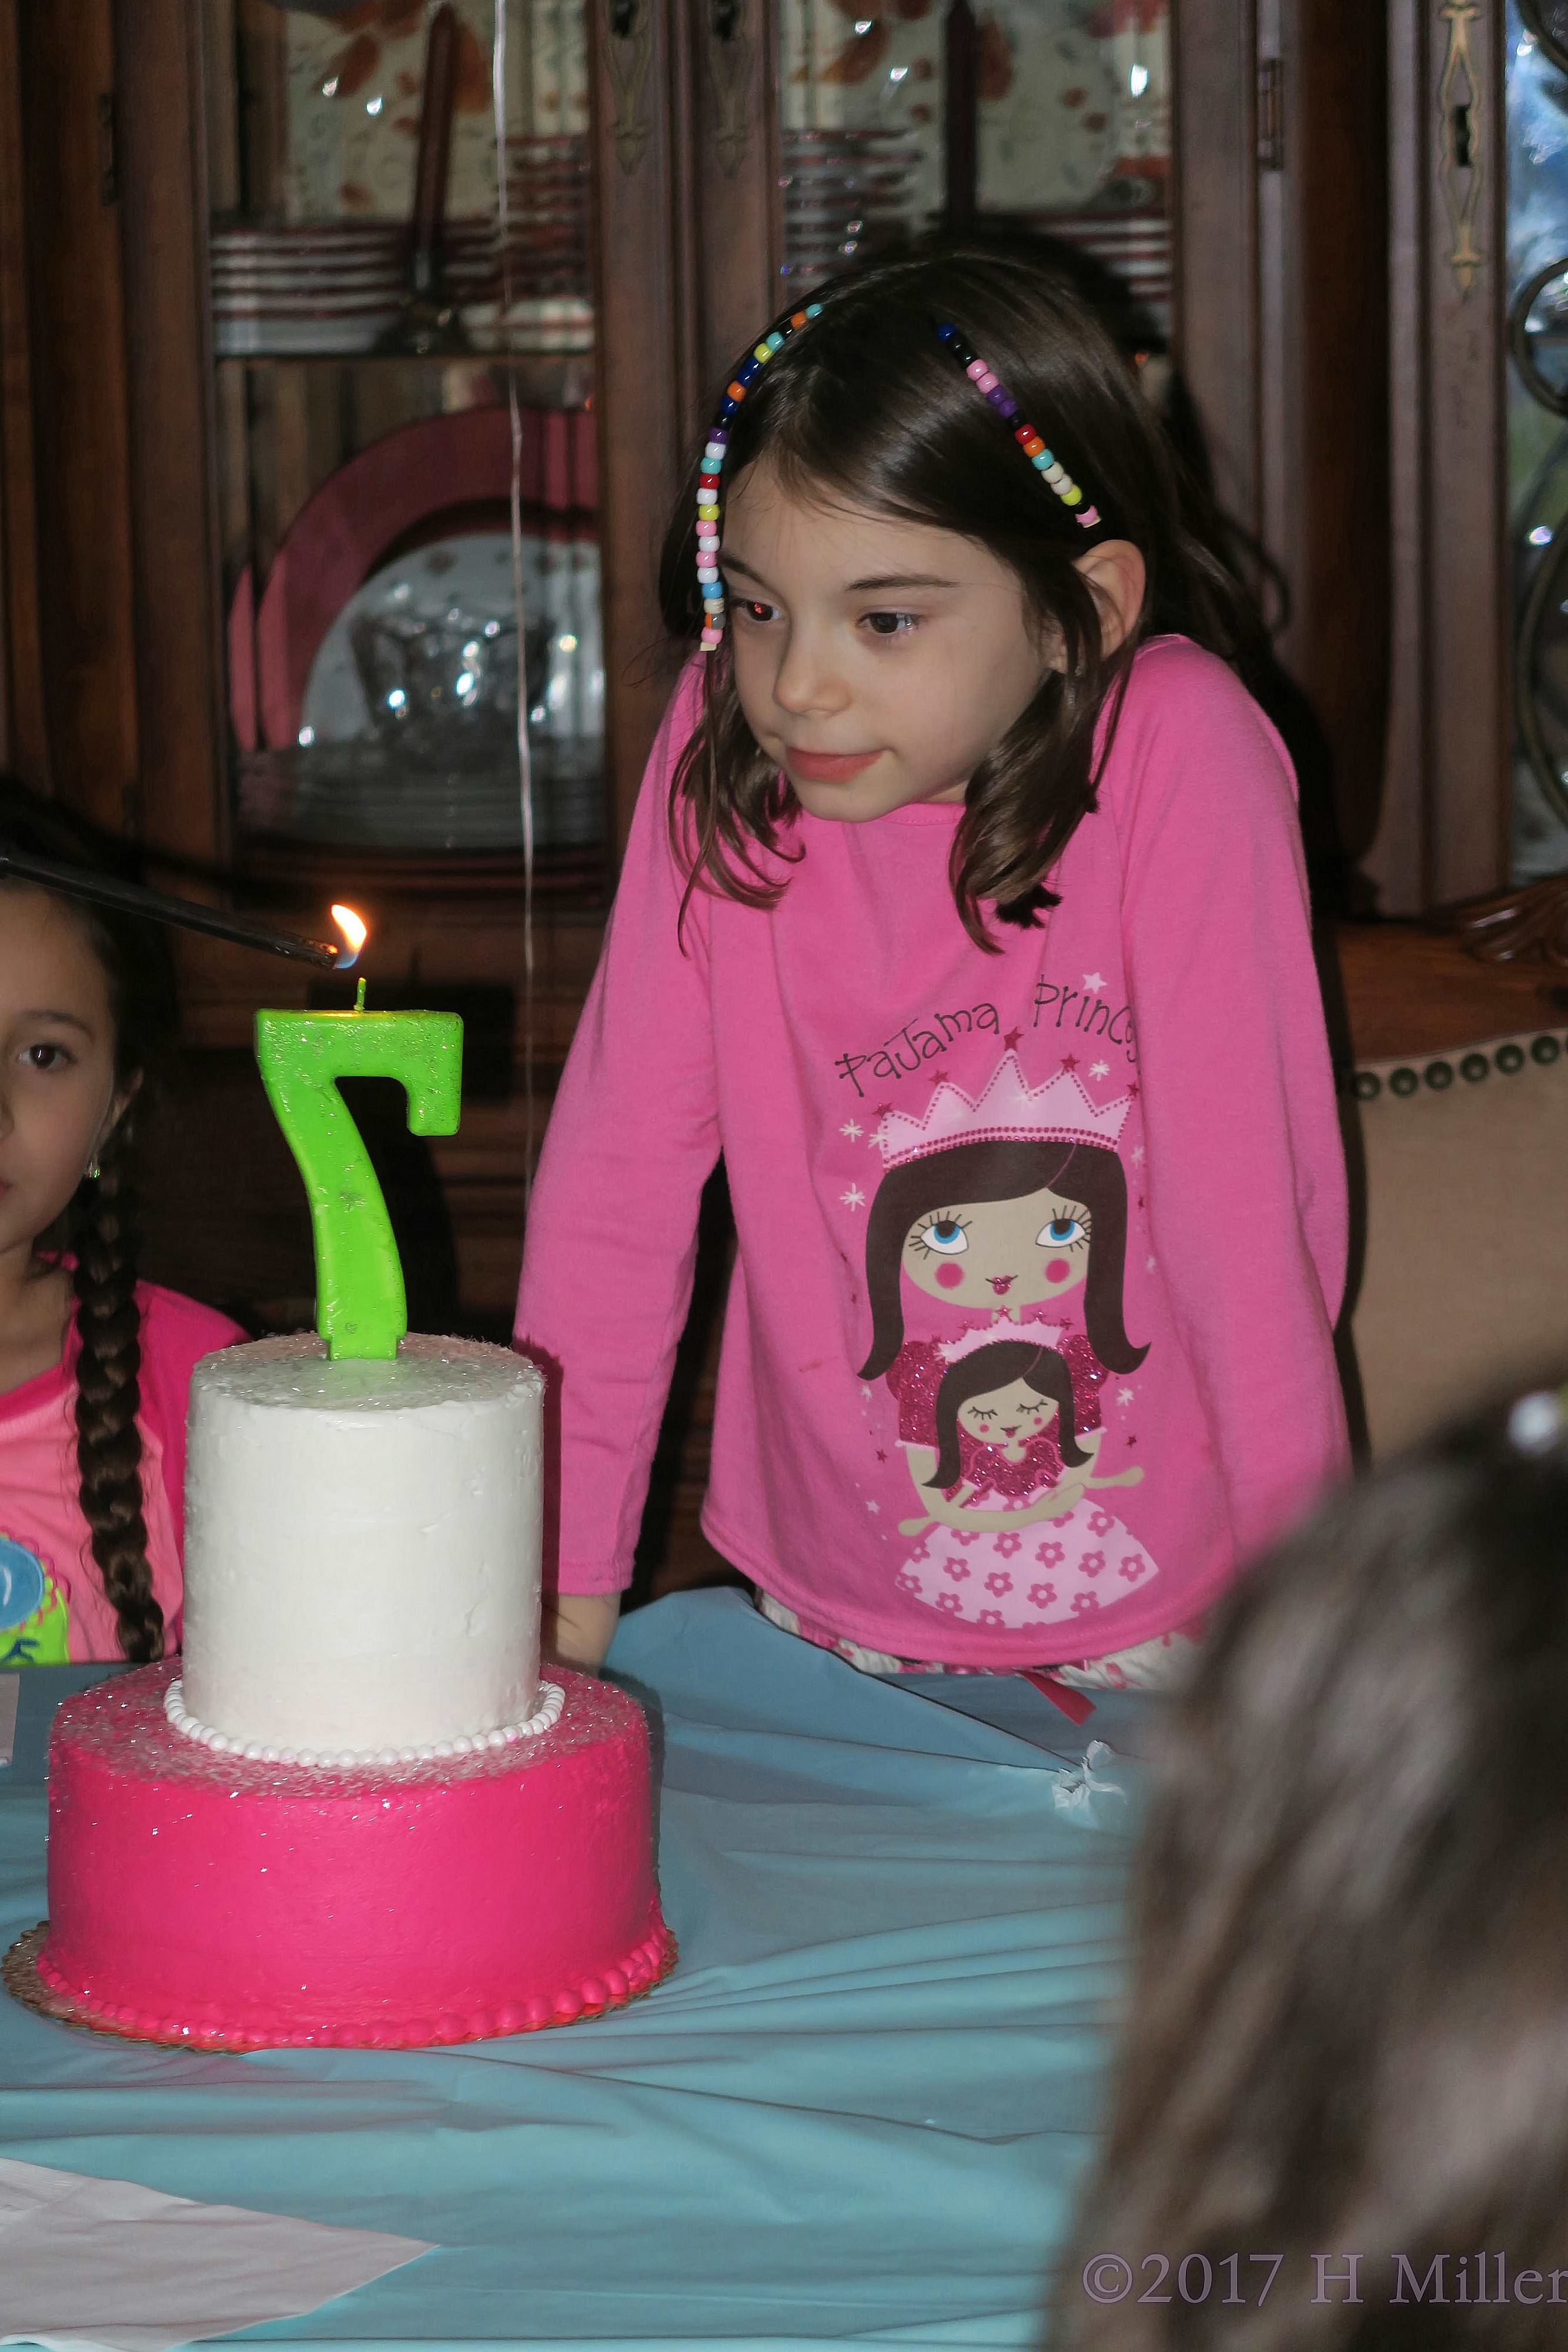 The Birthday Girl Loves Her Pretty Spa Themed Birthday Cake 4